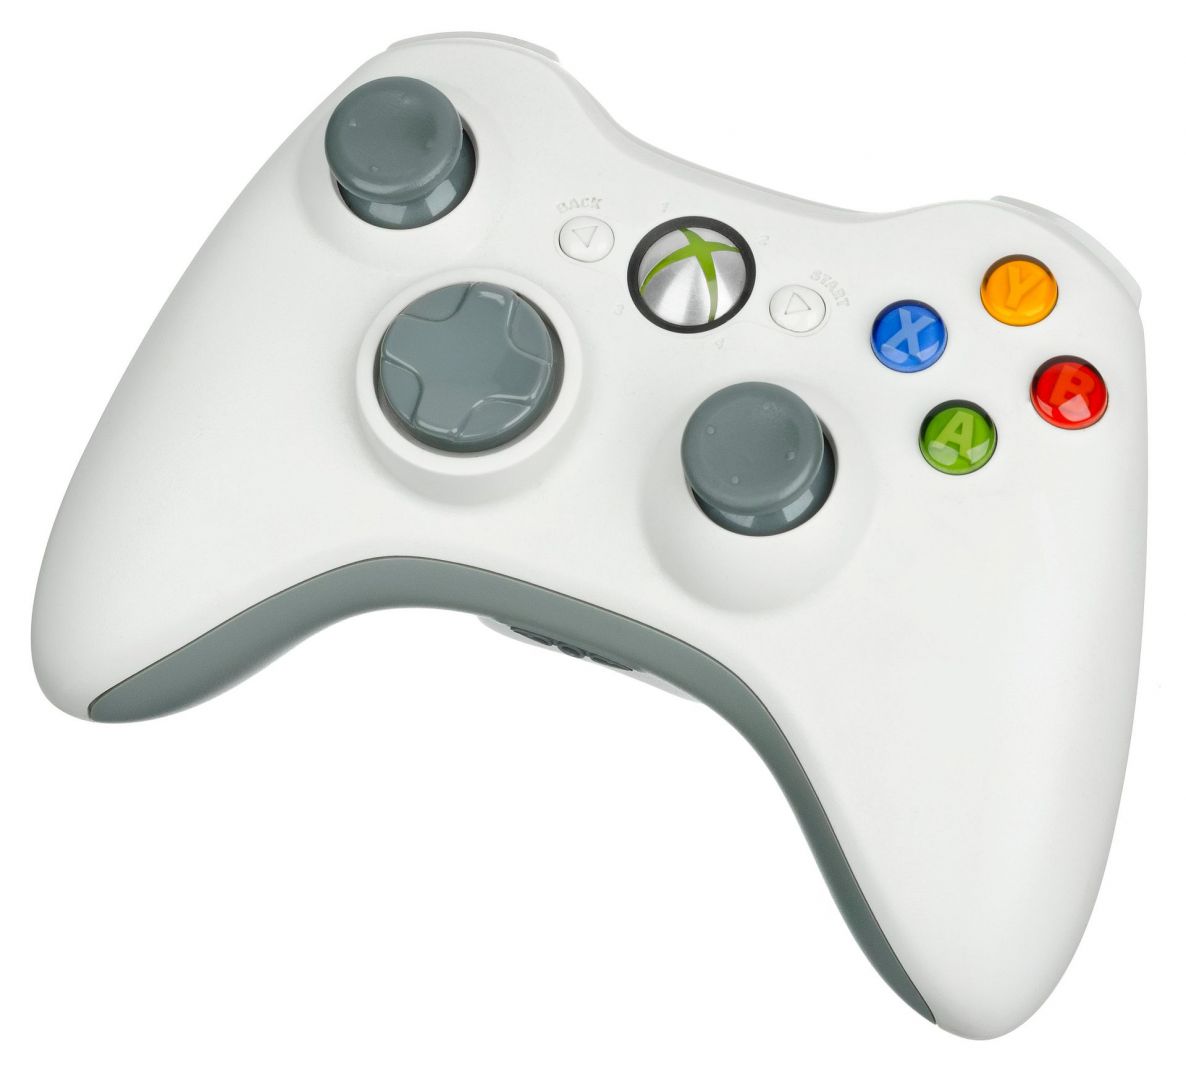 Xbox 360 mando - generacion xbox